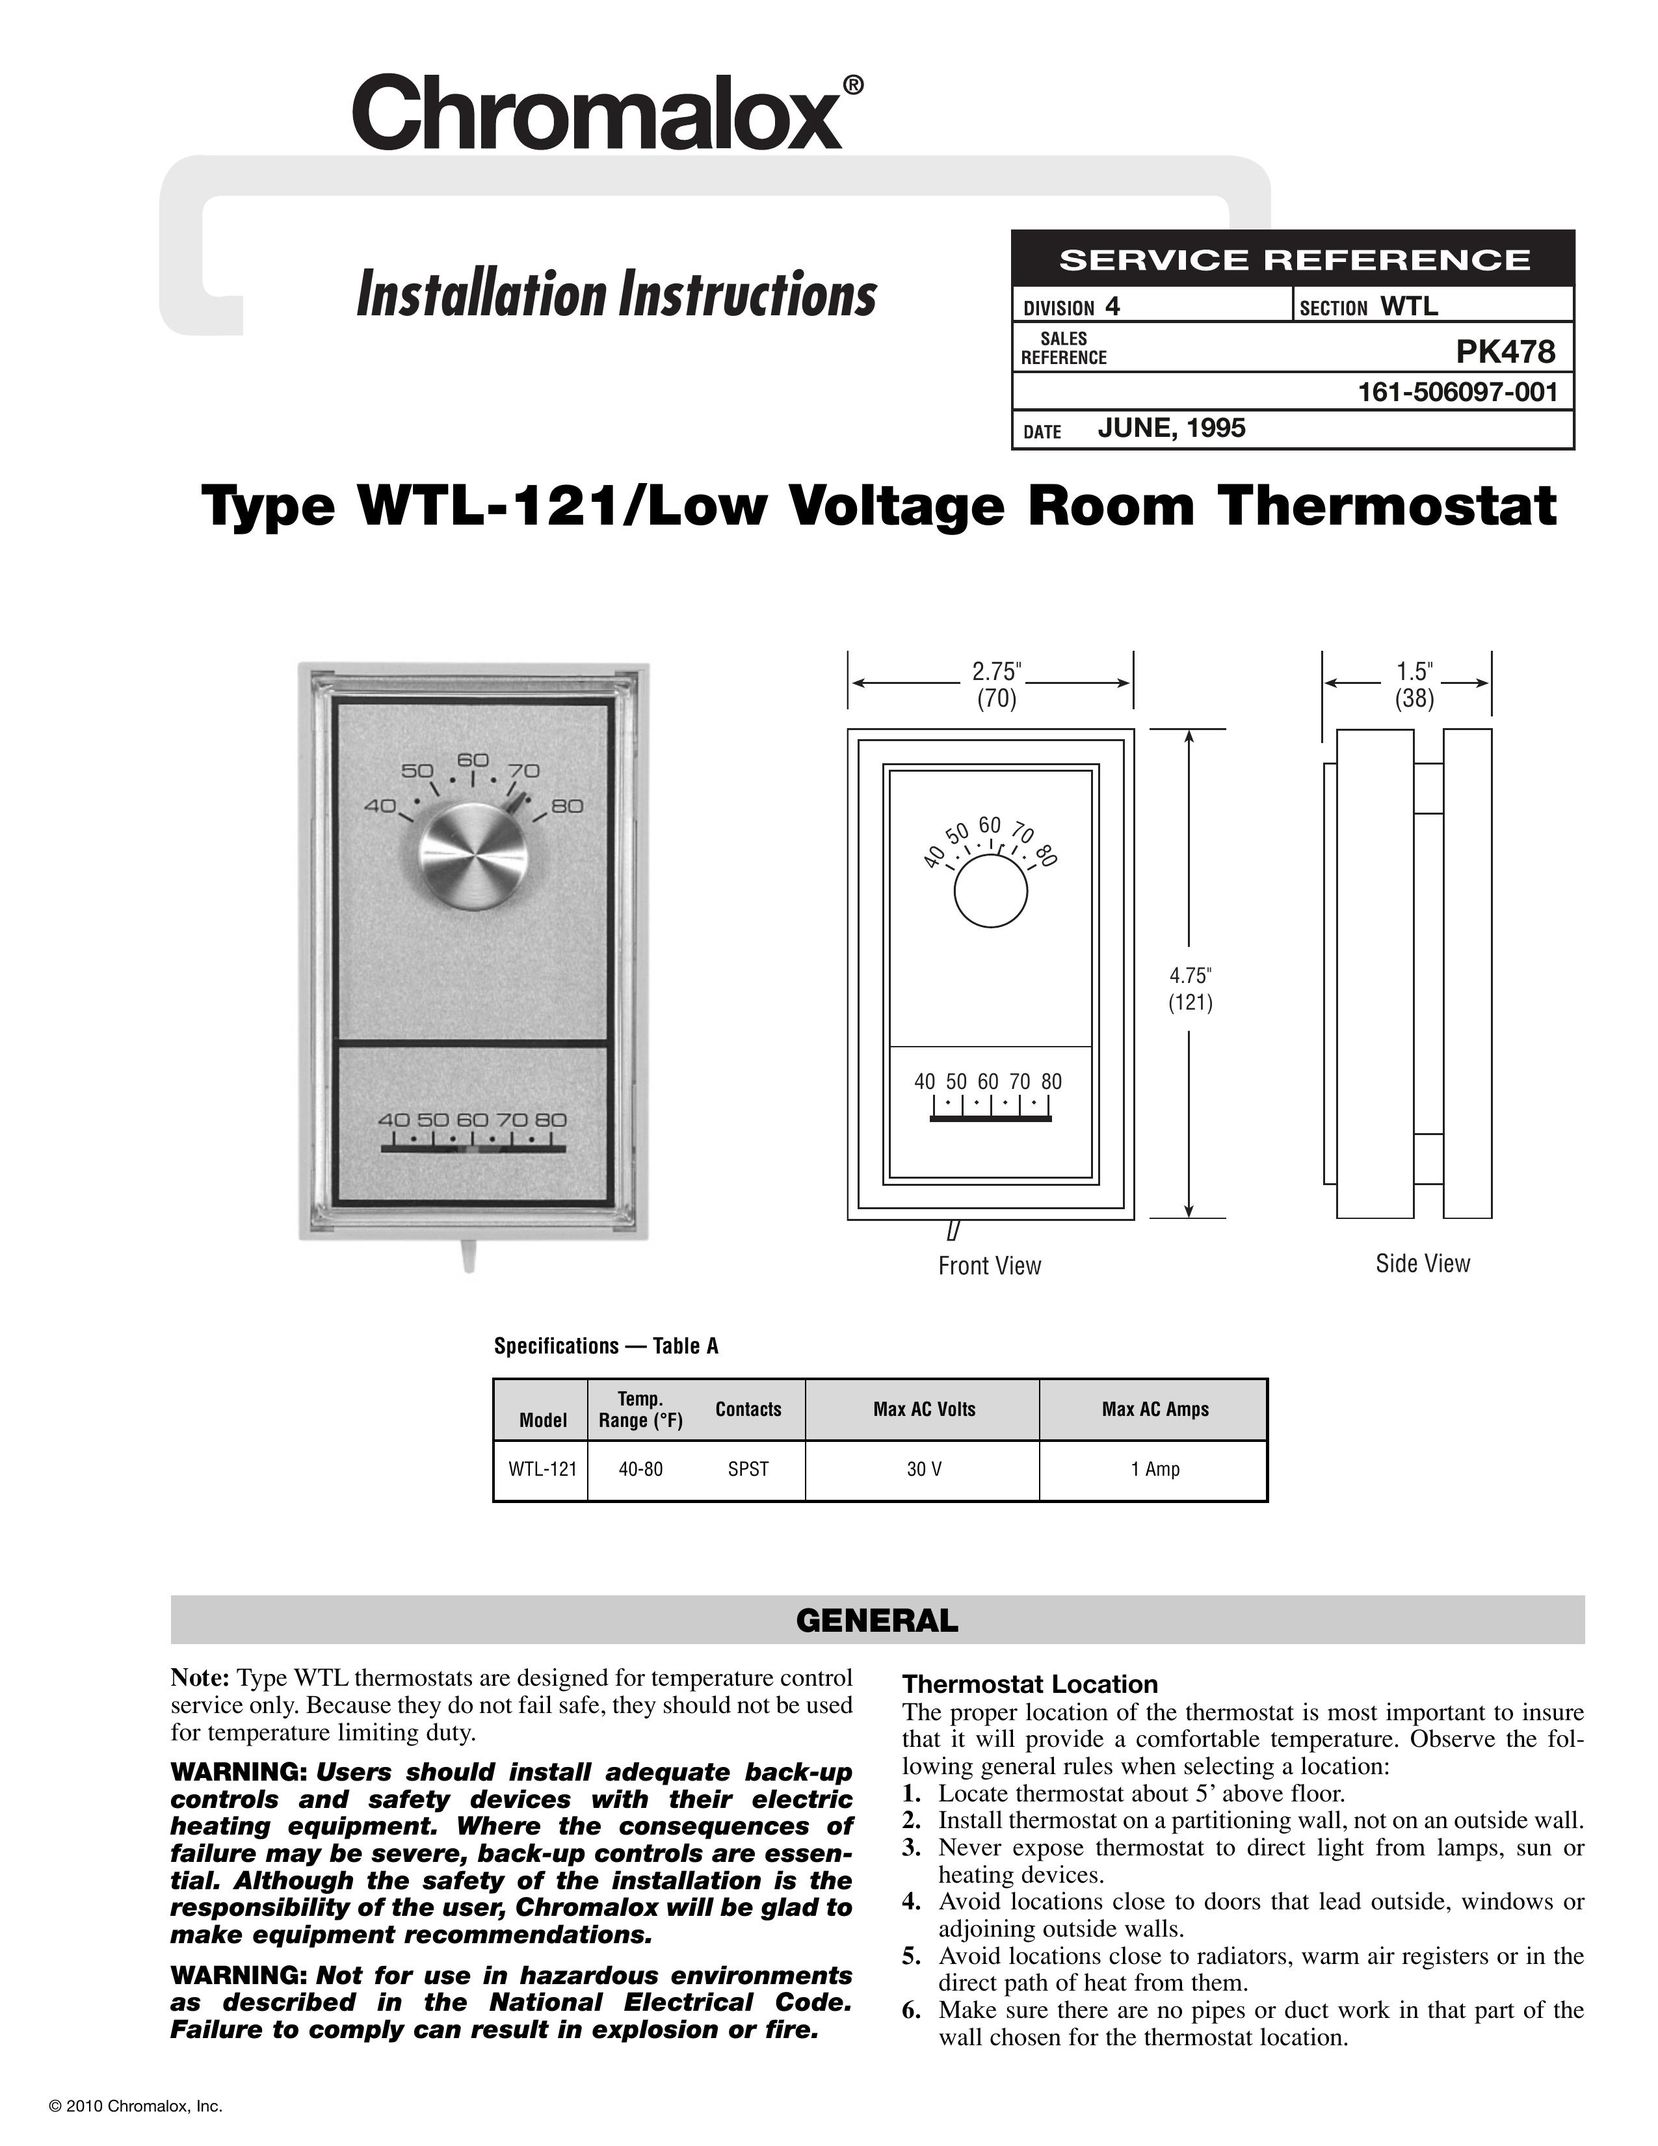 Chromalox WTL-121 Thermostat User Manual